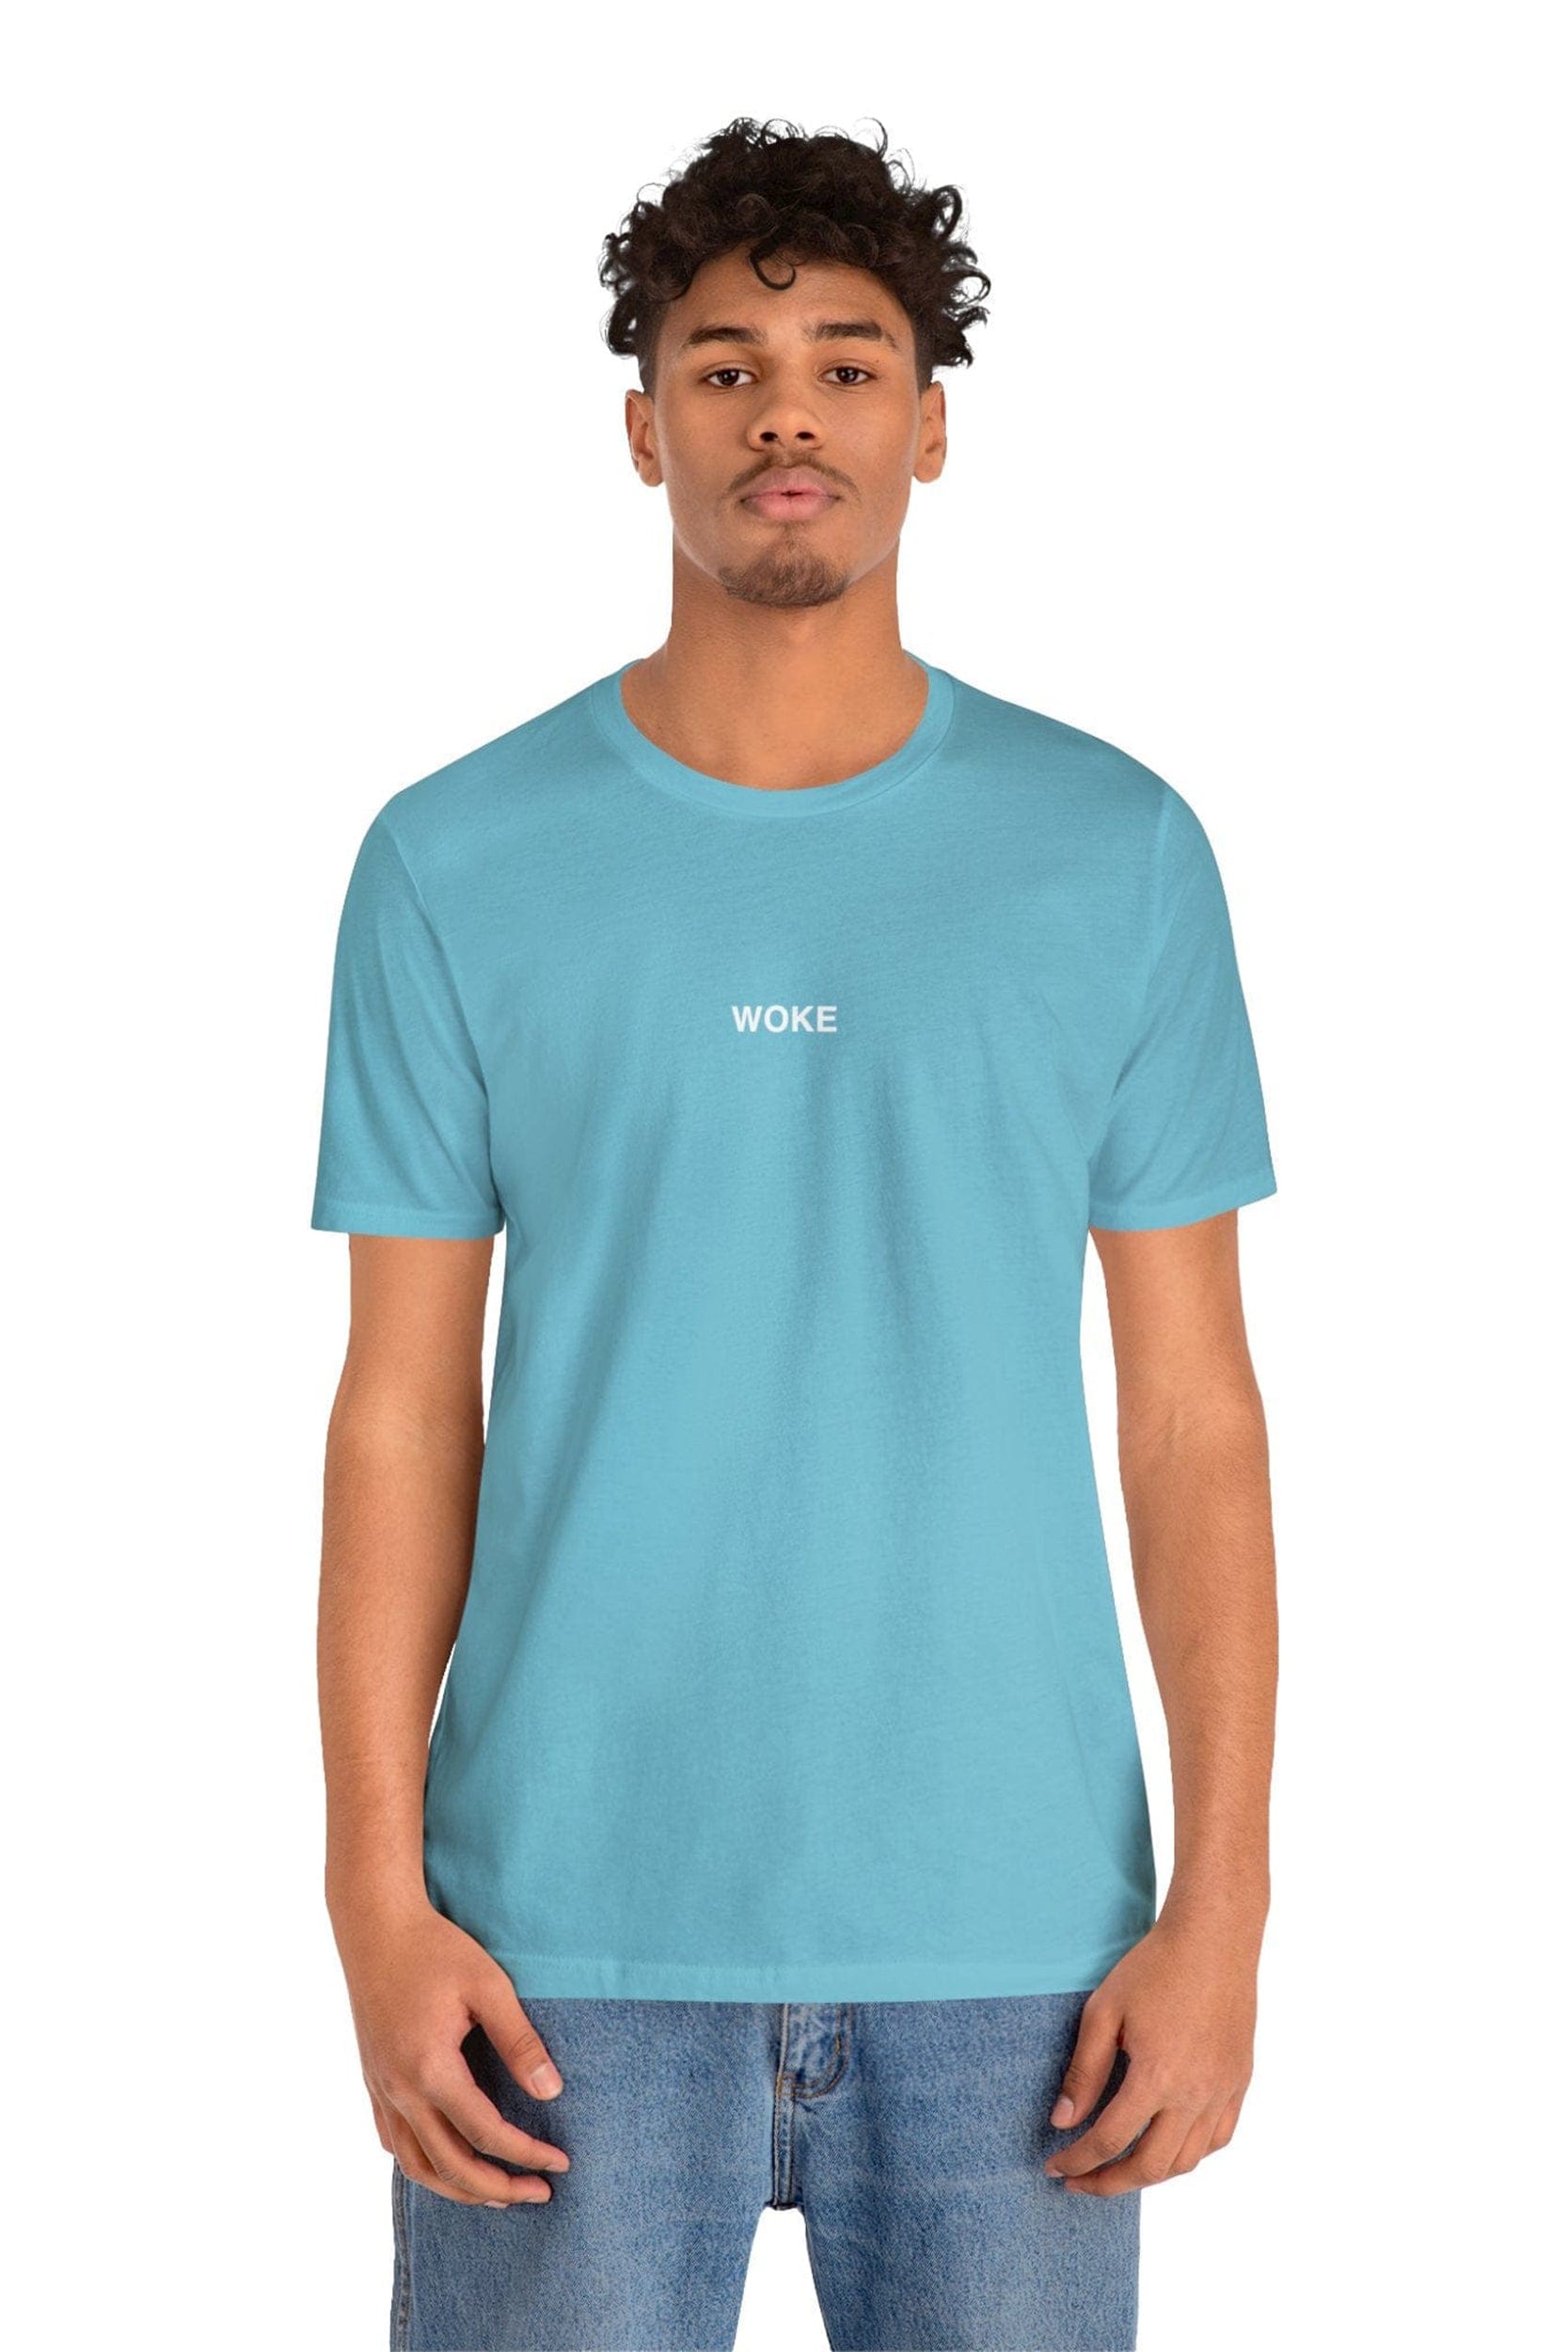 "WOKE" T-Shirt